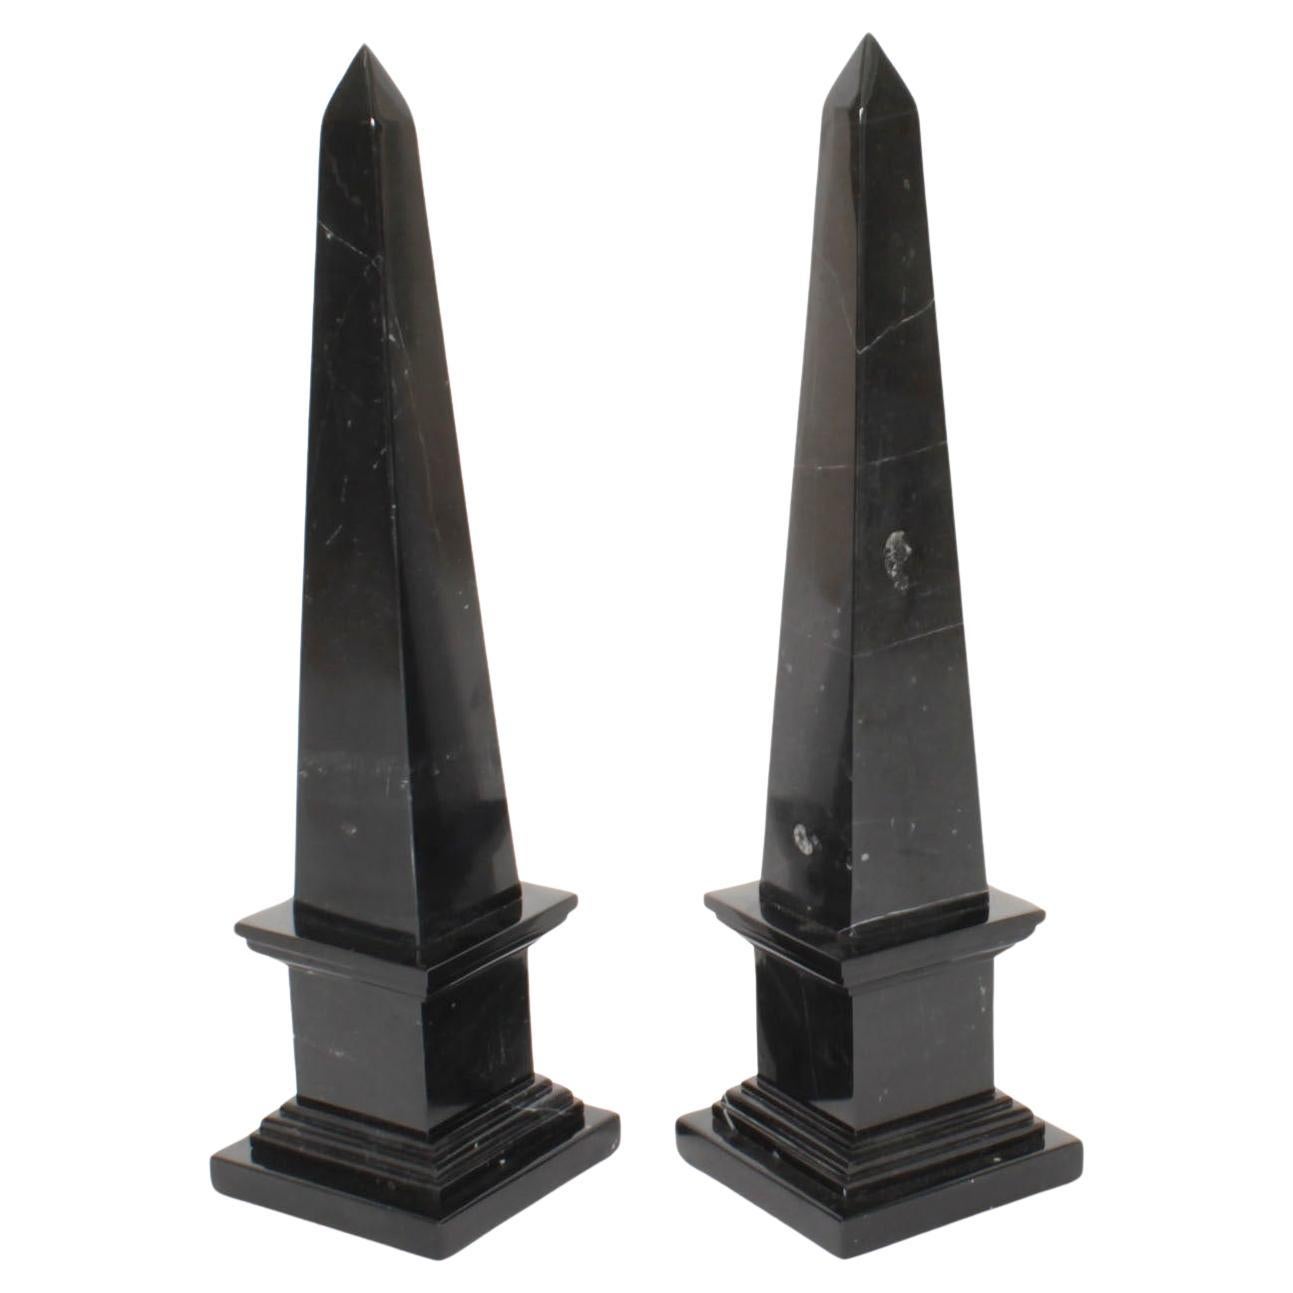 Paar Obelisken aus schwarzem Marmor im Empire-Revival-Stil, 20. Jahrhundert